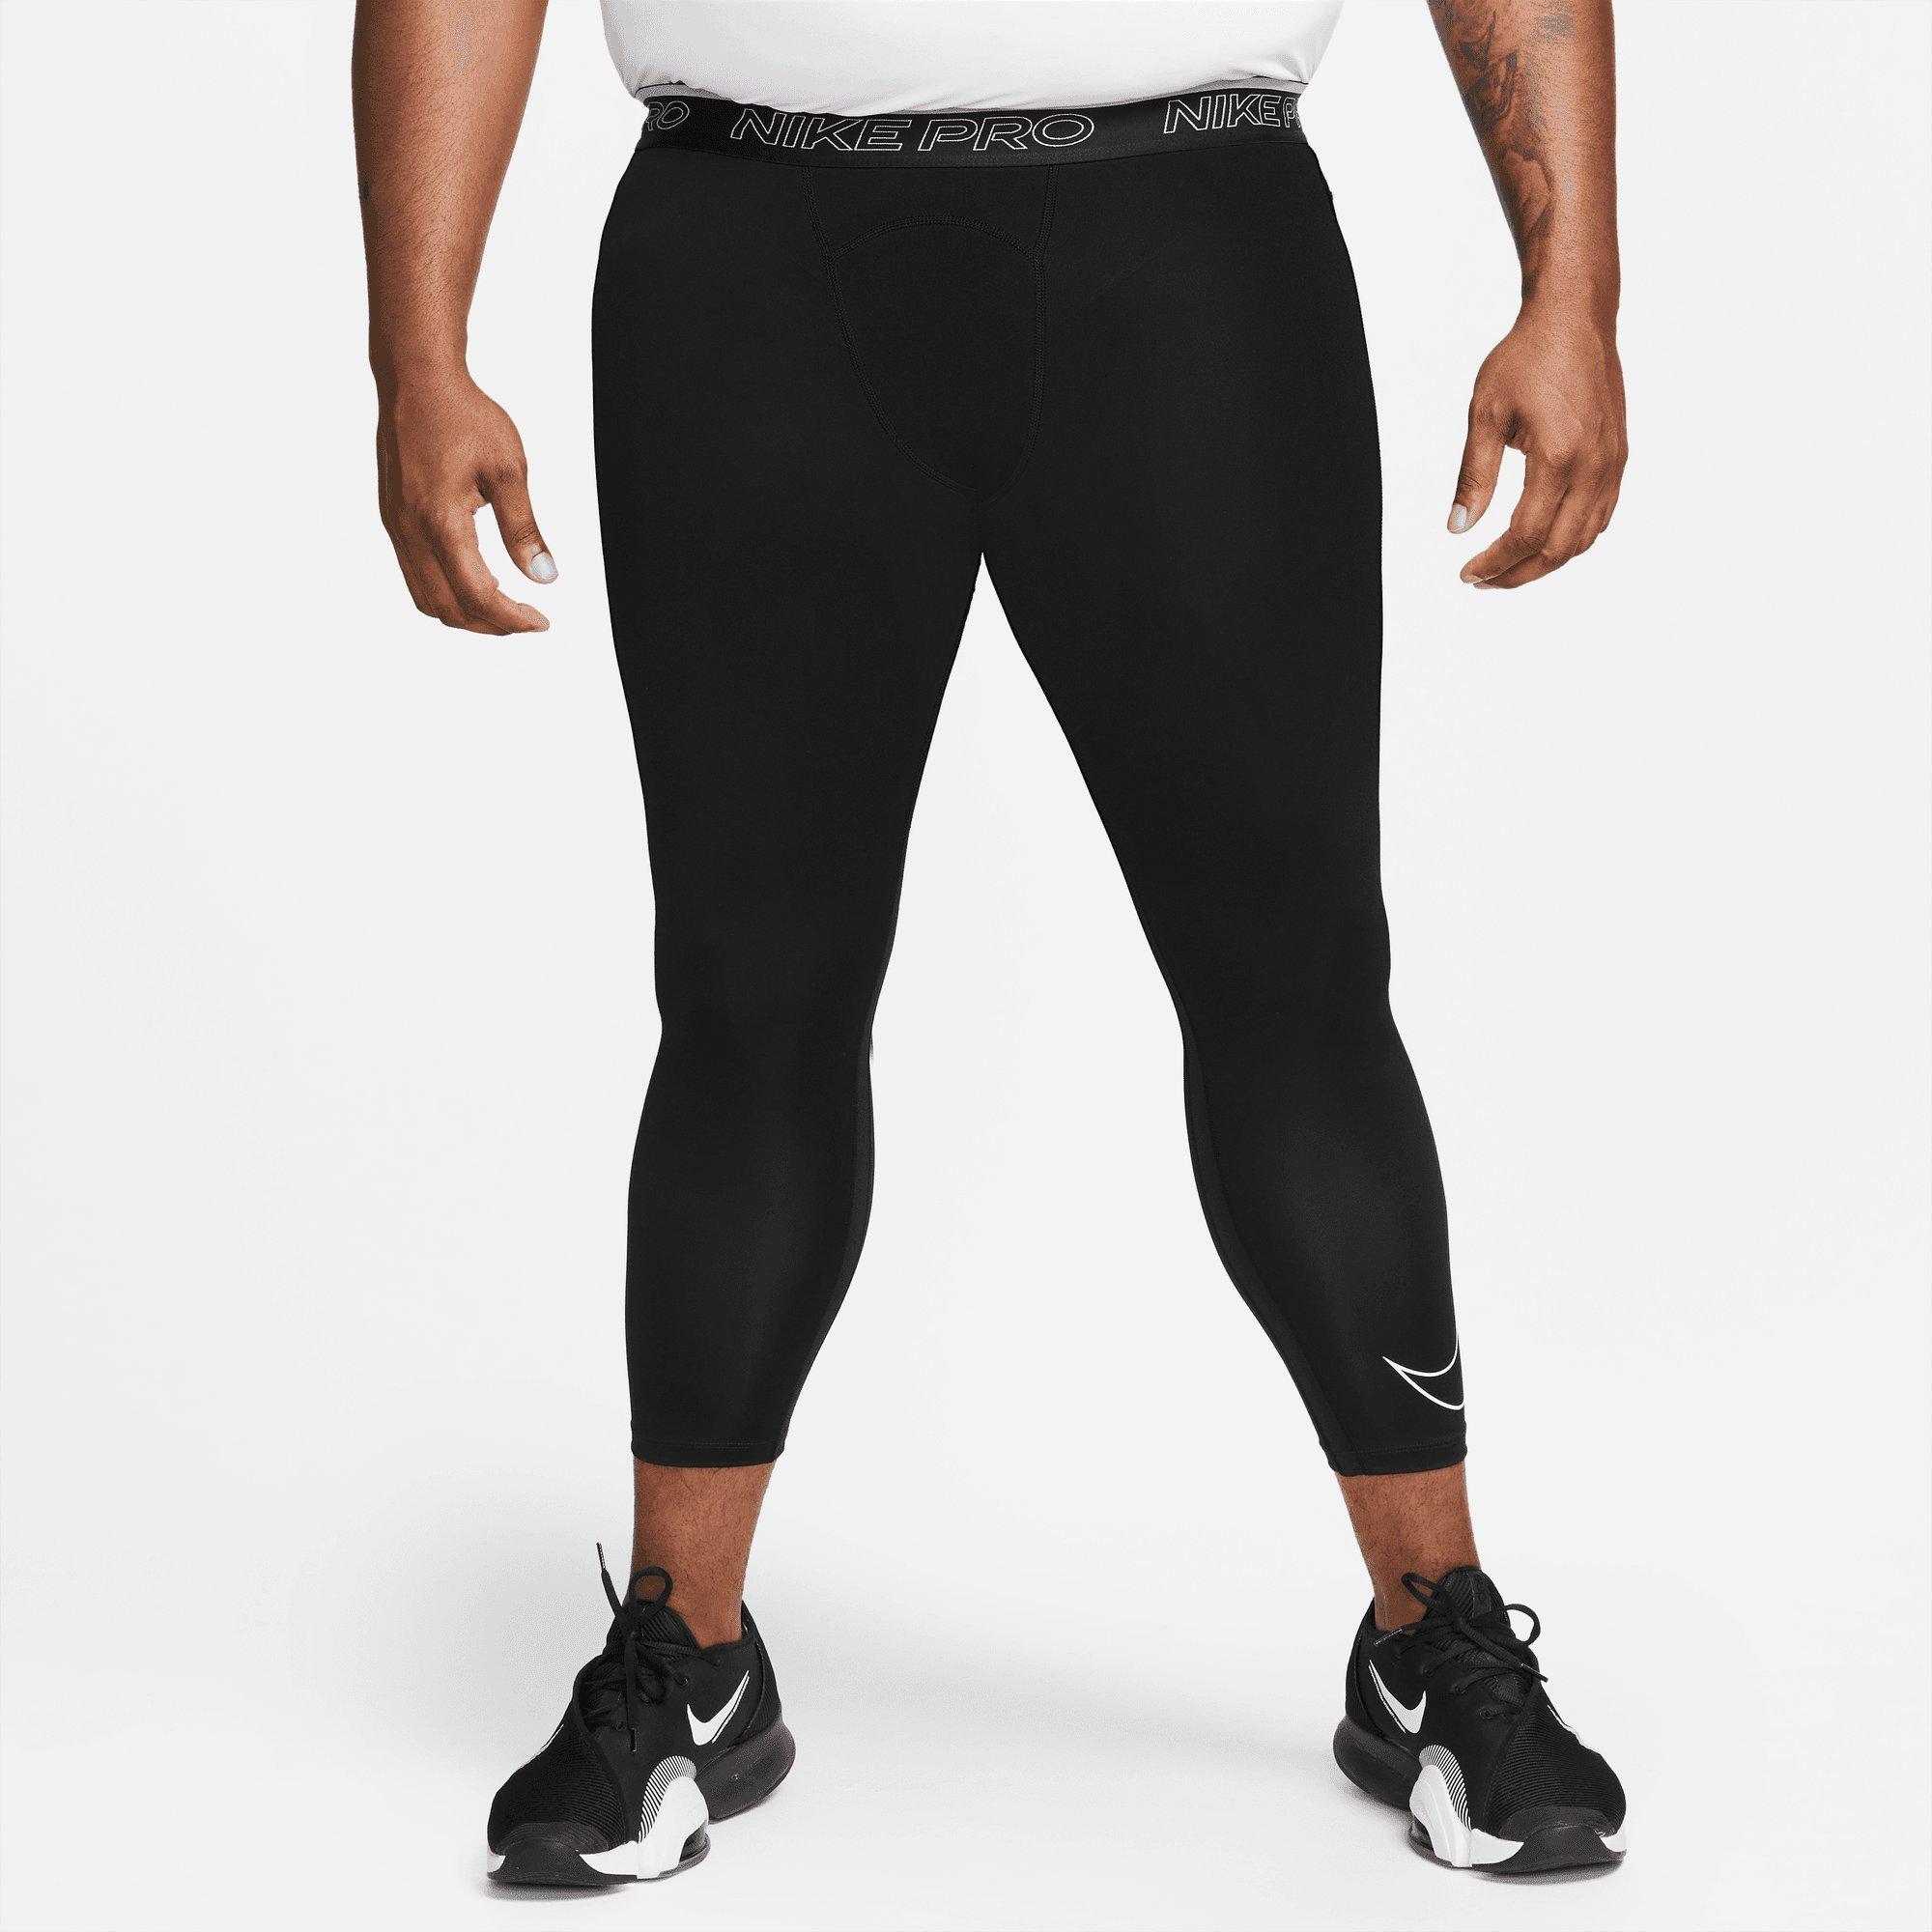 Nike Men's Pro Combat 6 Compression Shorts (Black/Dark Grey/White, Large)  